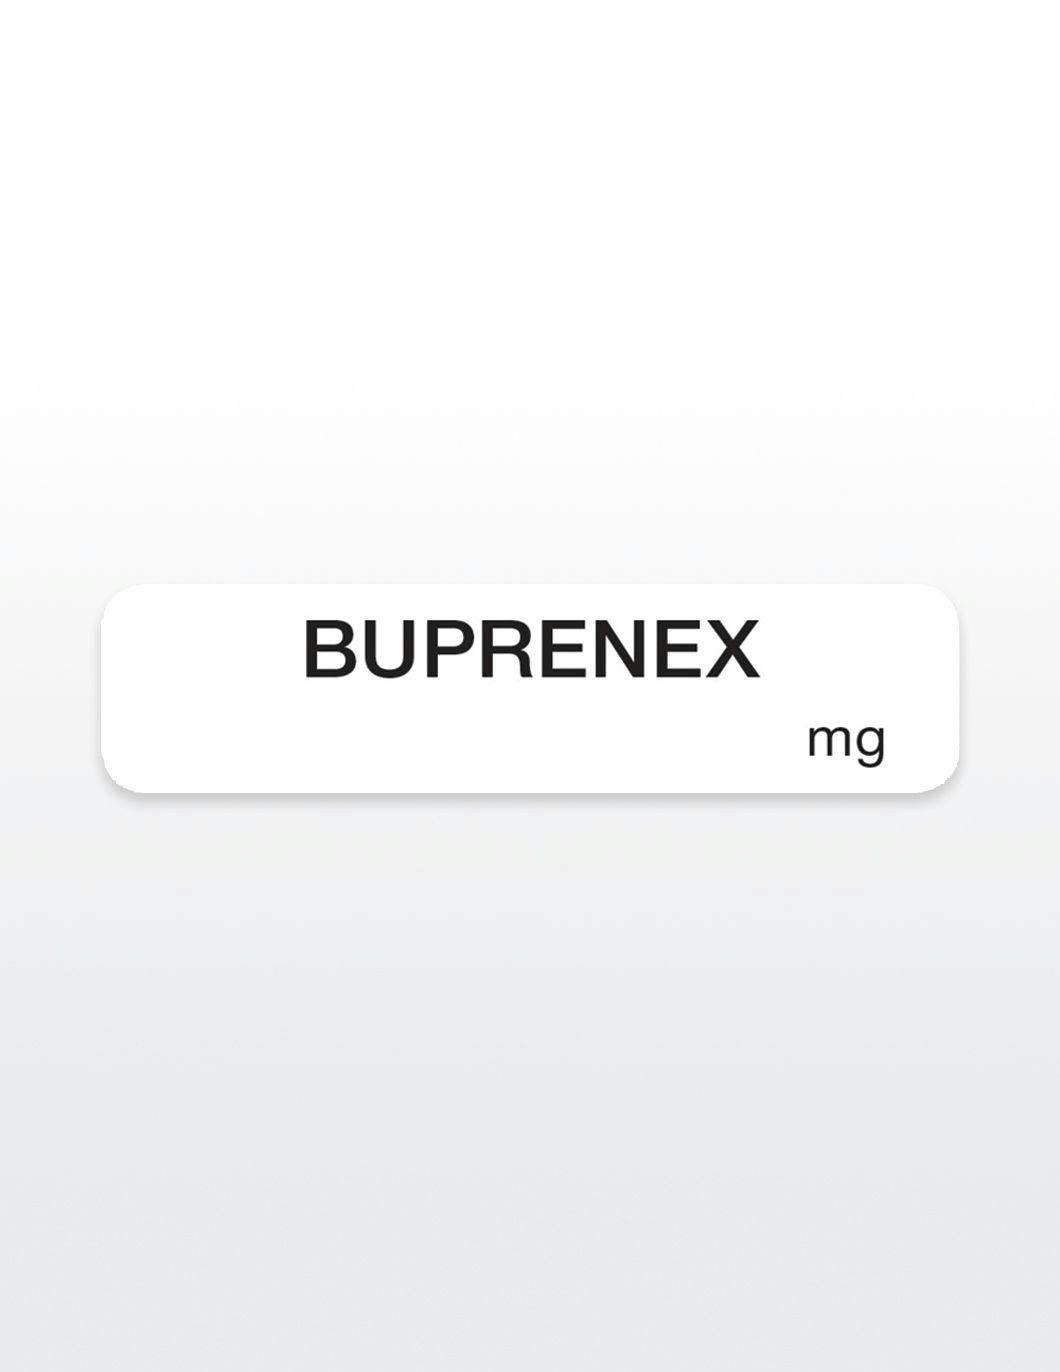 buprenex-drug-syringe-stickers